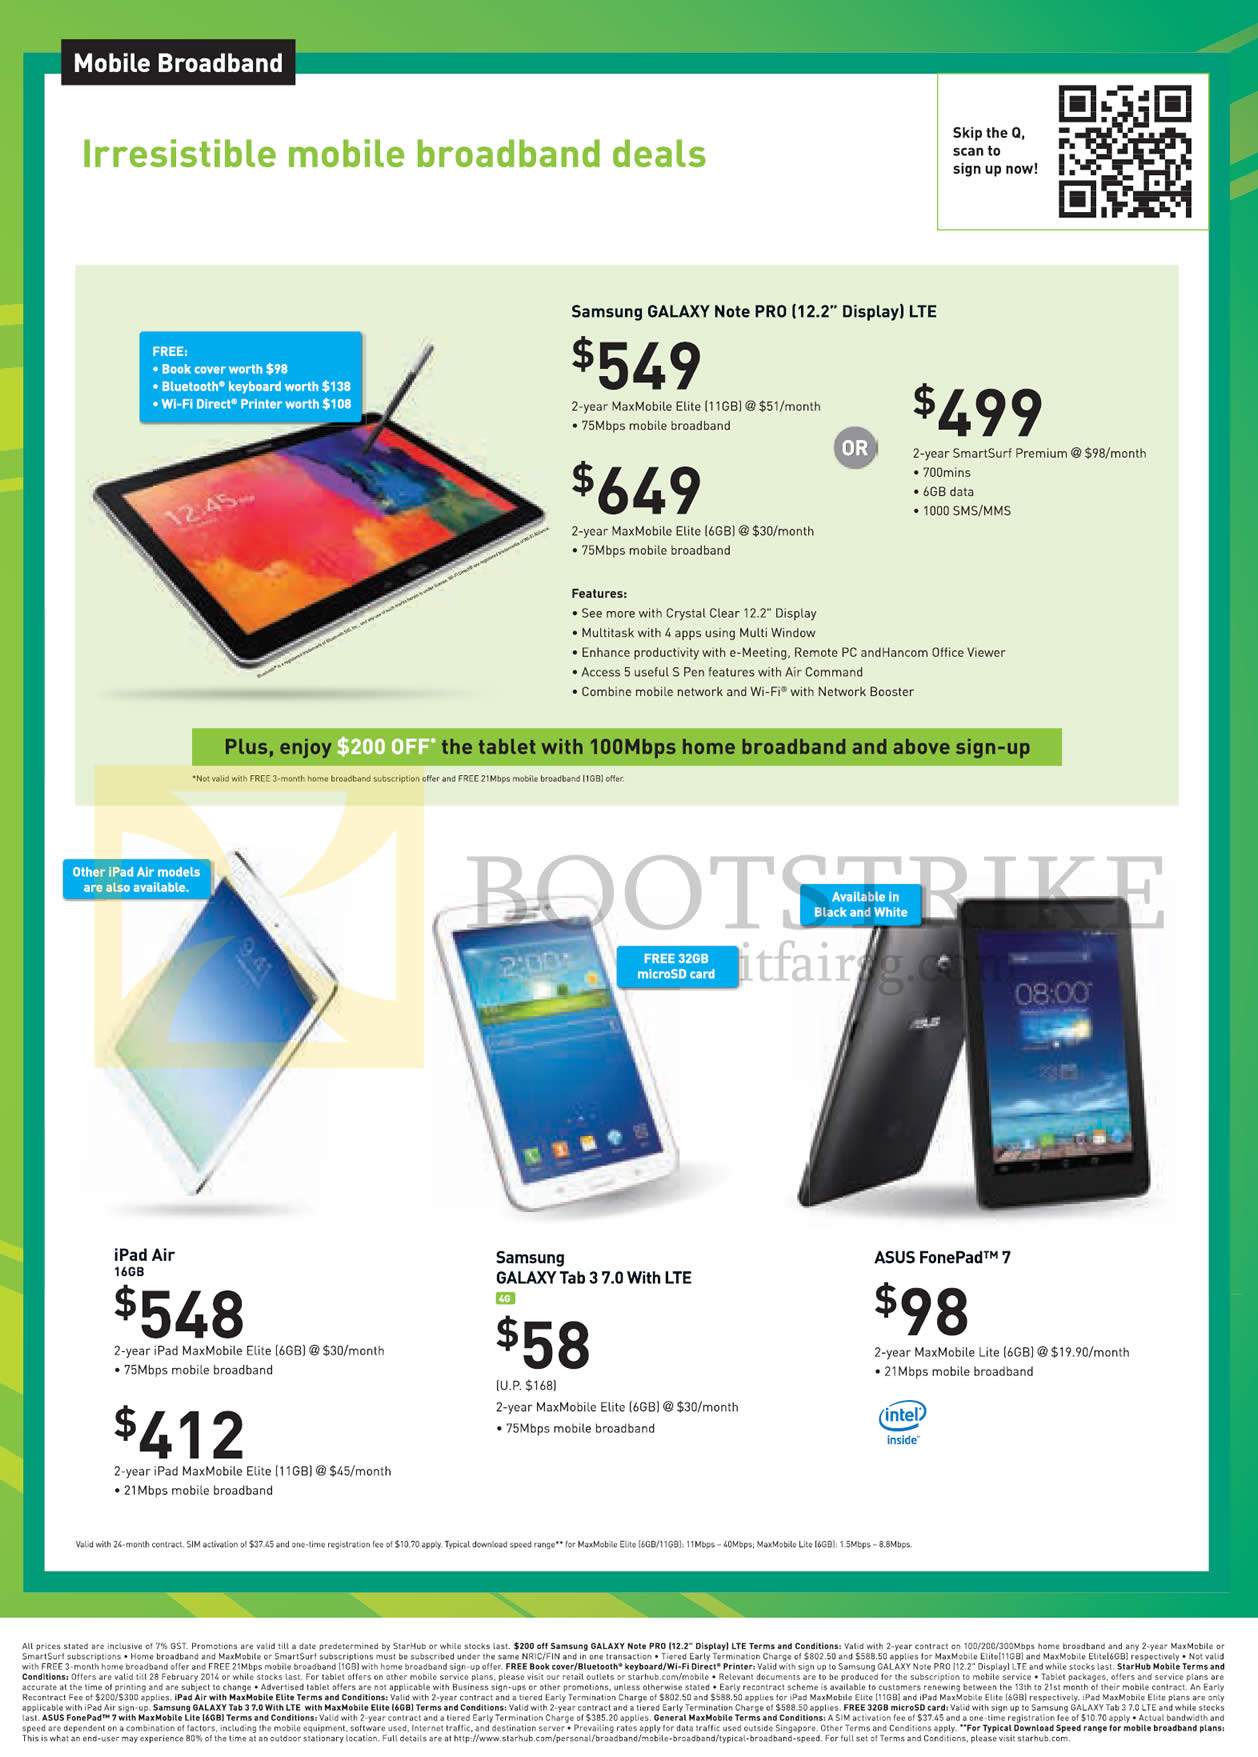 IT SHOW 2014 price list image brochure of Starhub Mobile Broadband Samsung Galaxy Note Pro, Tab 3 7.0, Apple IPad Air, ASUS FonePad 7